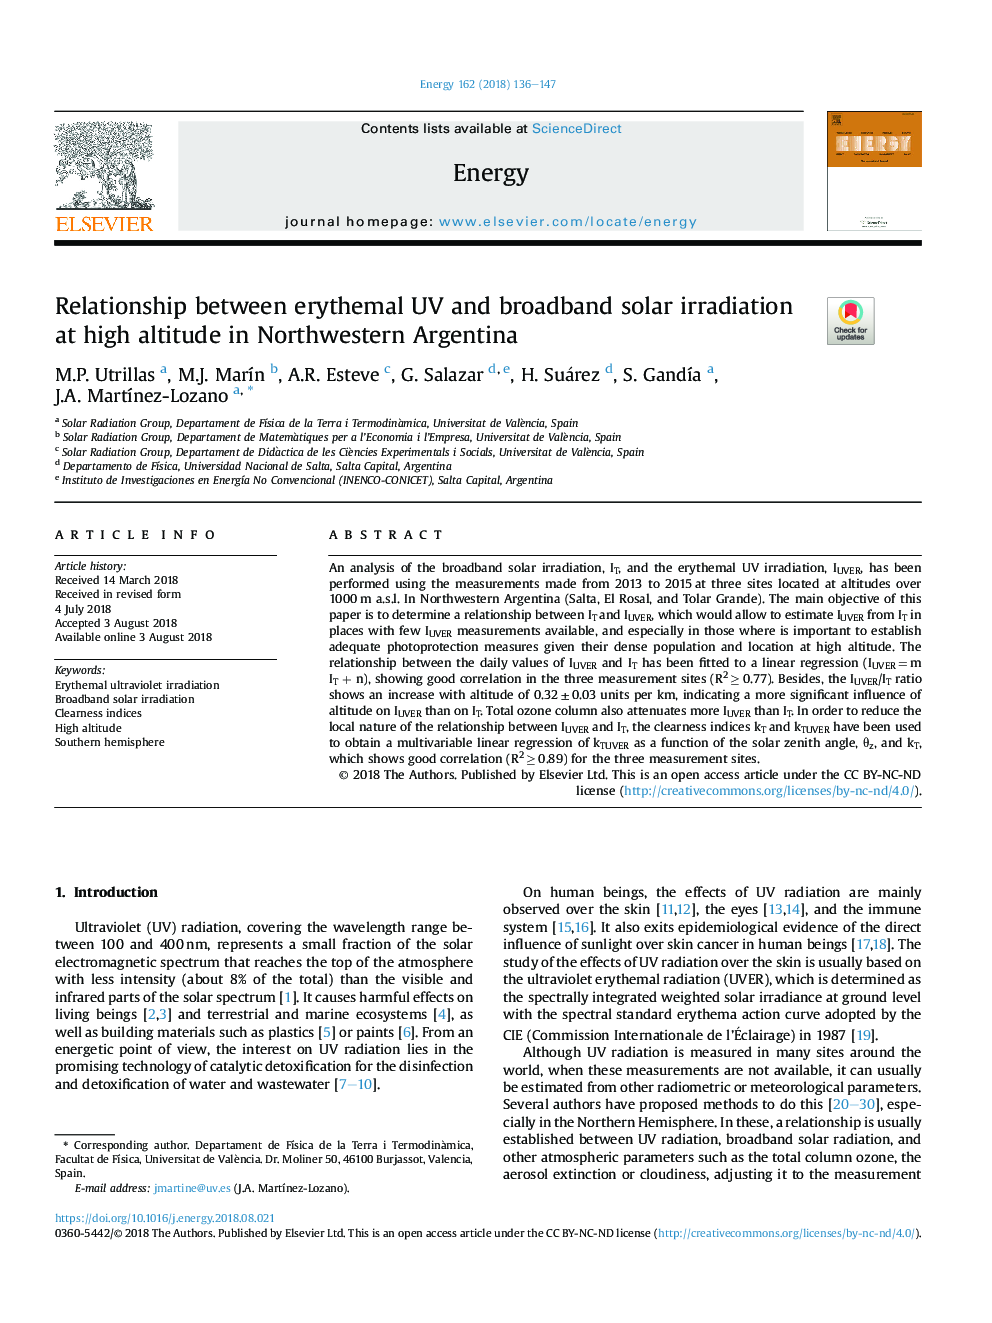 Relationship between erythemal UV and broadband solar irradiation at high altitude in Northwestern Argentina